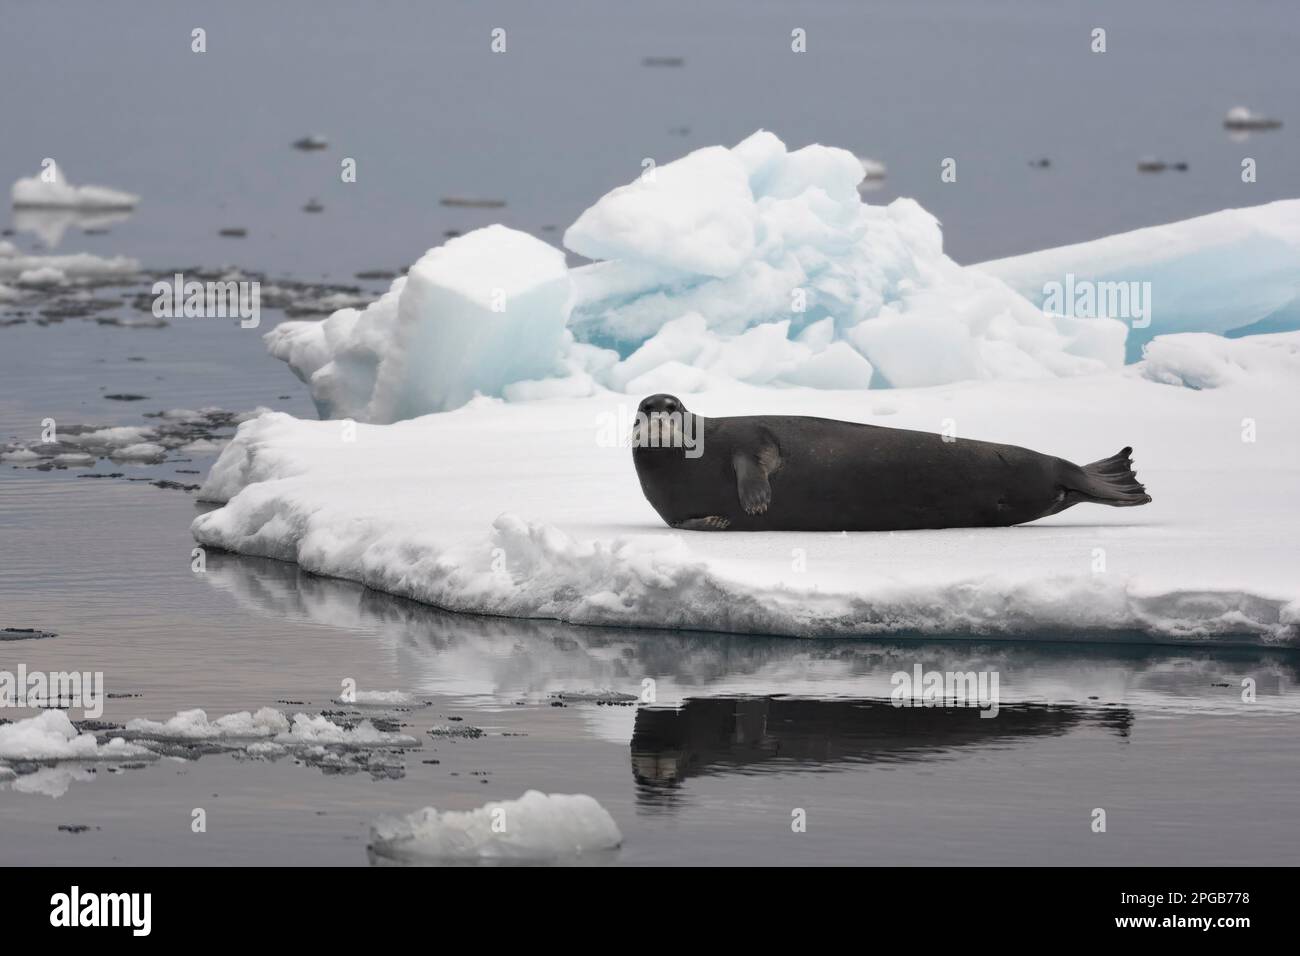 Bearded seal (Erignathus barbatus) on an ice floe in pack ice with water reflection, Spitsbergen, Svalbard Archipelago Stock Photo